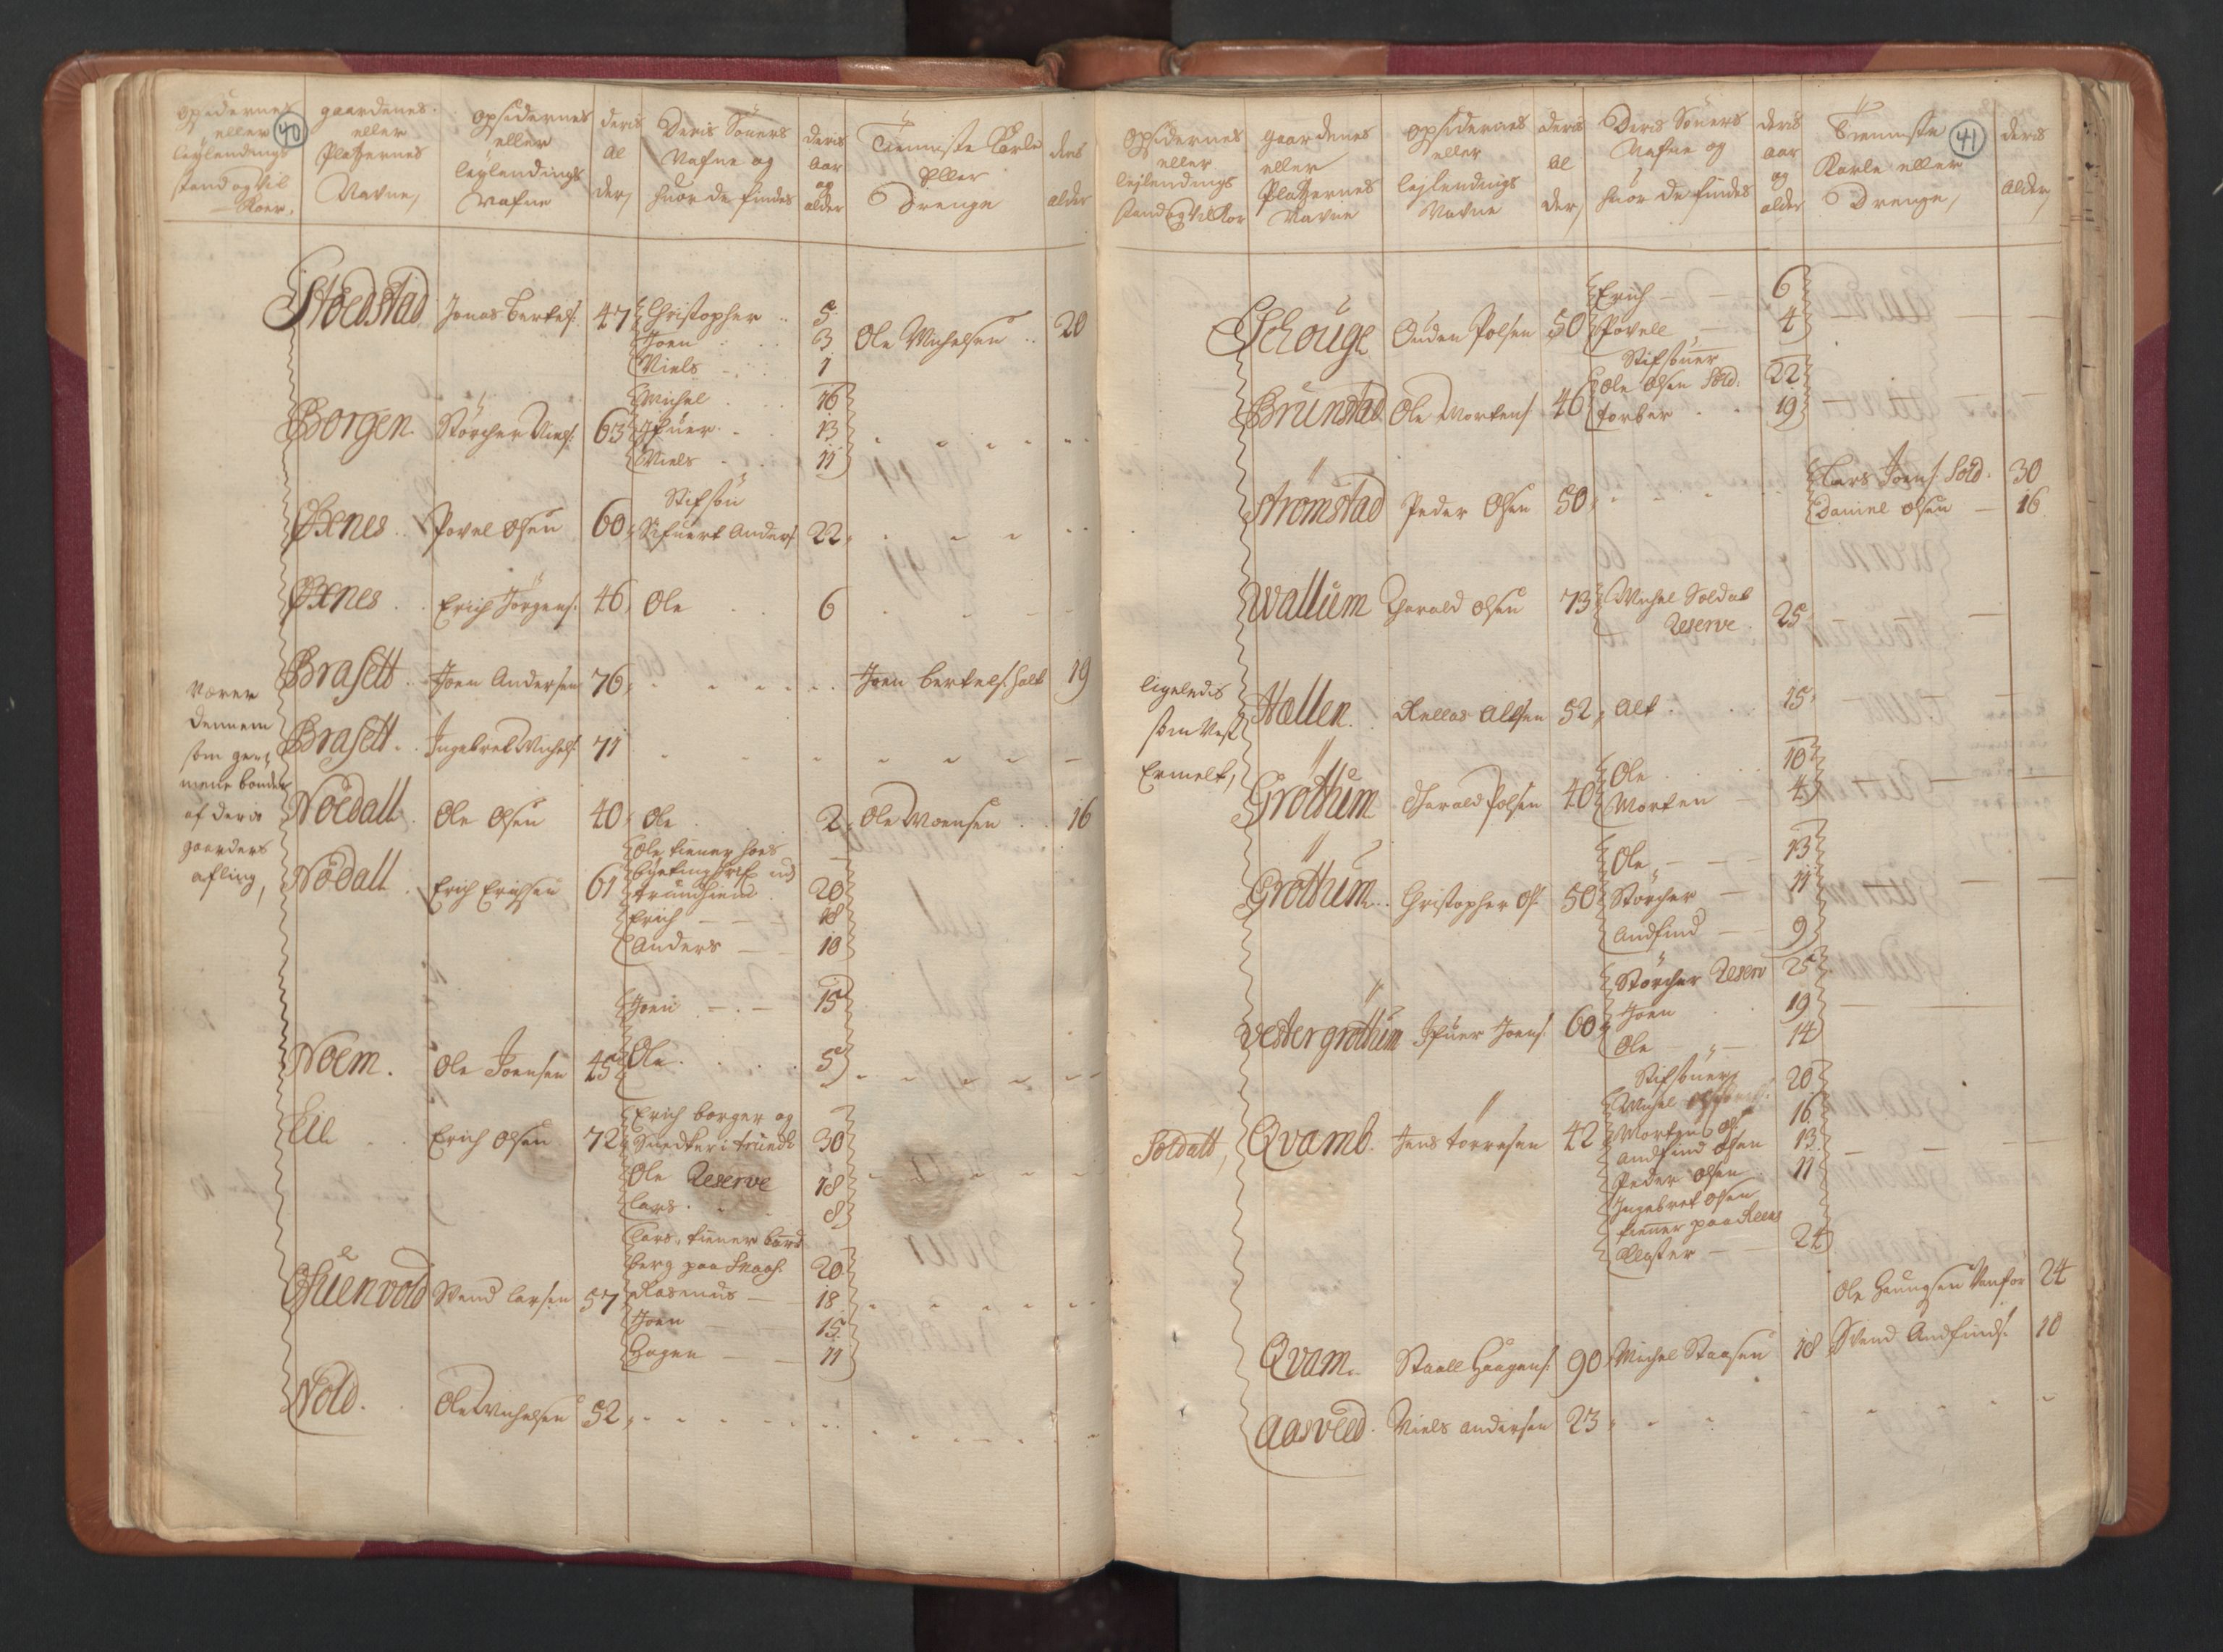 RA, Census (manntall) 1701, no. 15: Inderøy fogderi and Namdal fogderi, 1701, p. 40-41